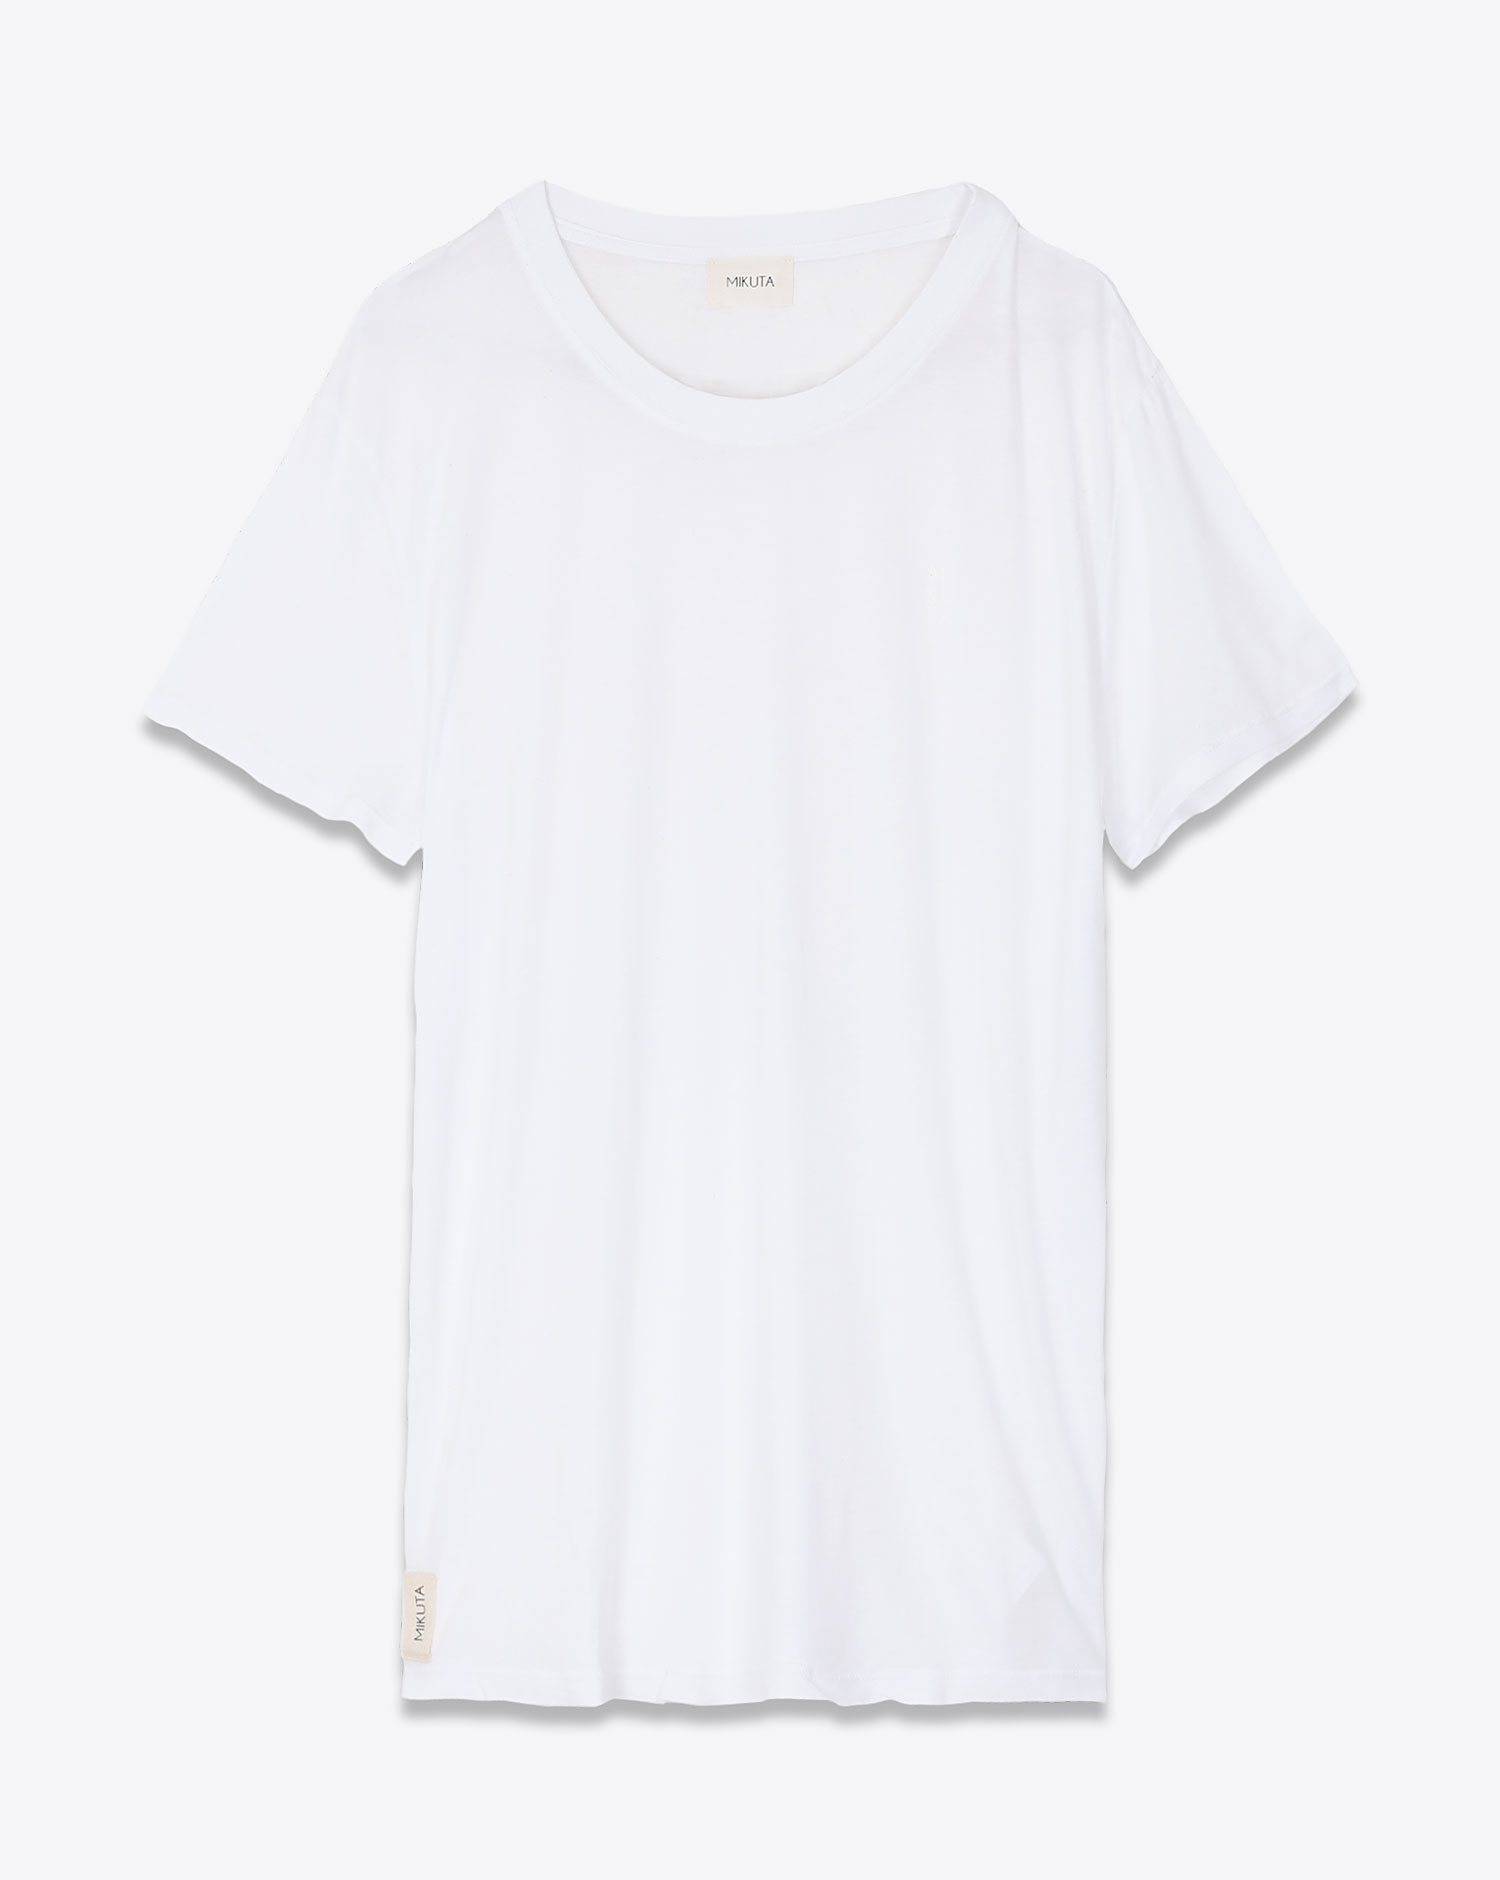 Mikuta Tee-shirt Logo Blanc